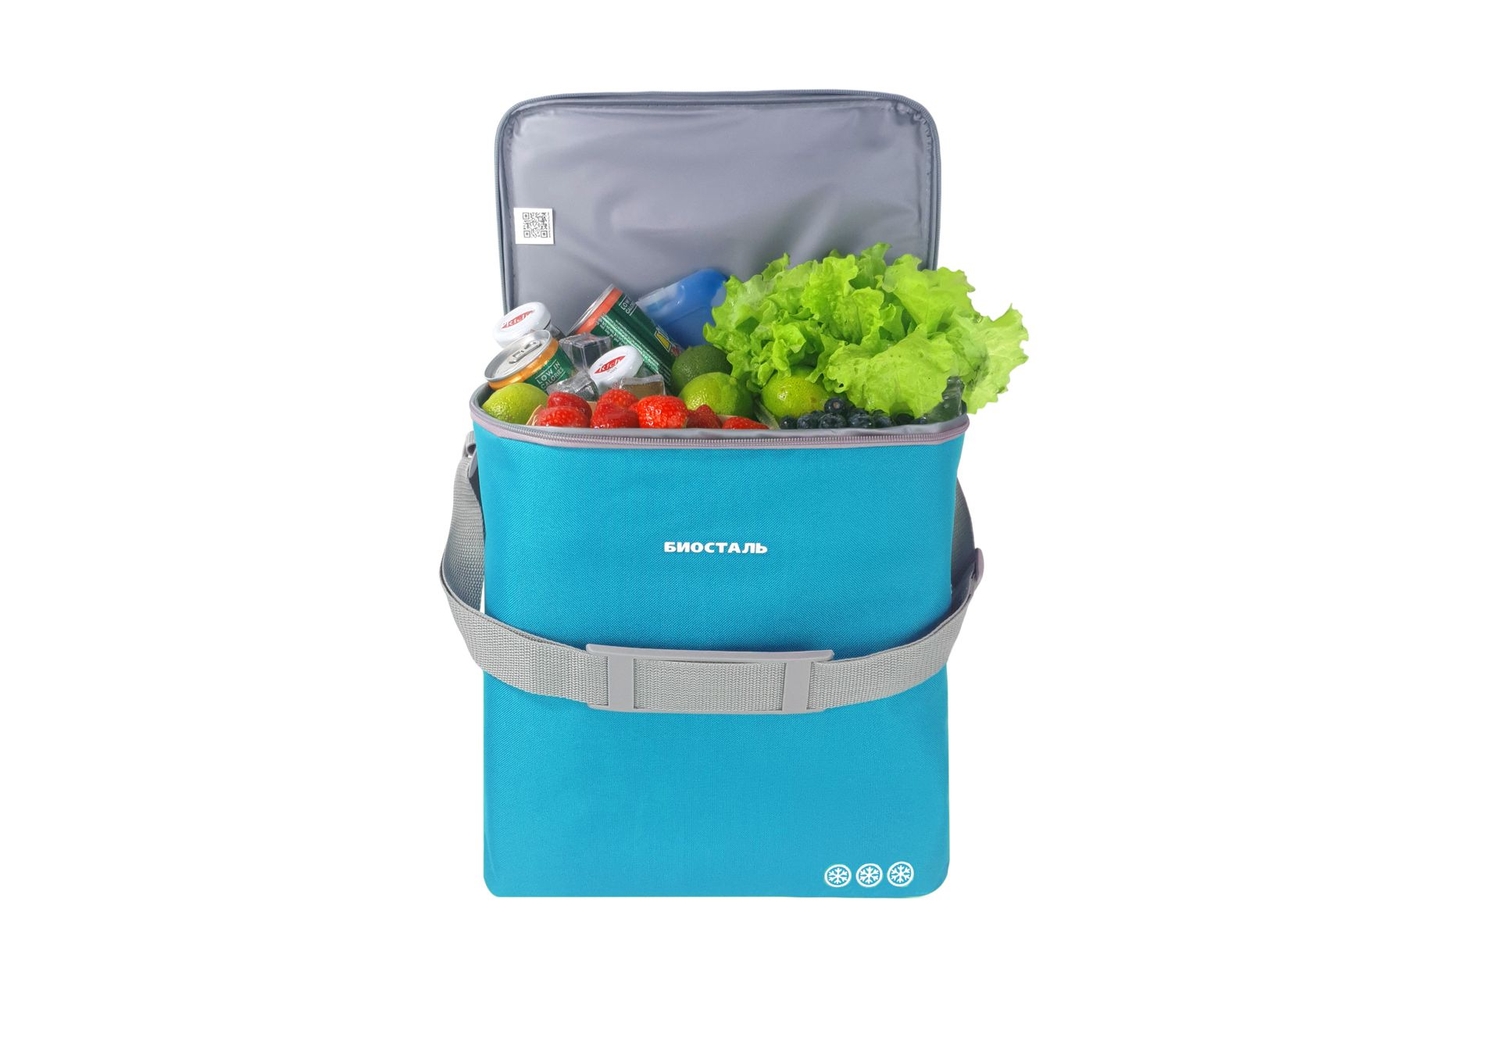 сумка холодильник кантри цвет лазурный 20л tcd 20b Термосумка (сумка-холодильник) Biostal Кантри (20 л.), синяя